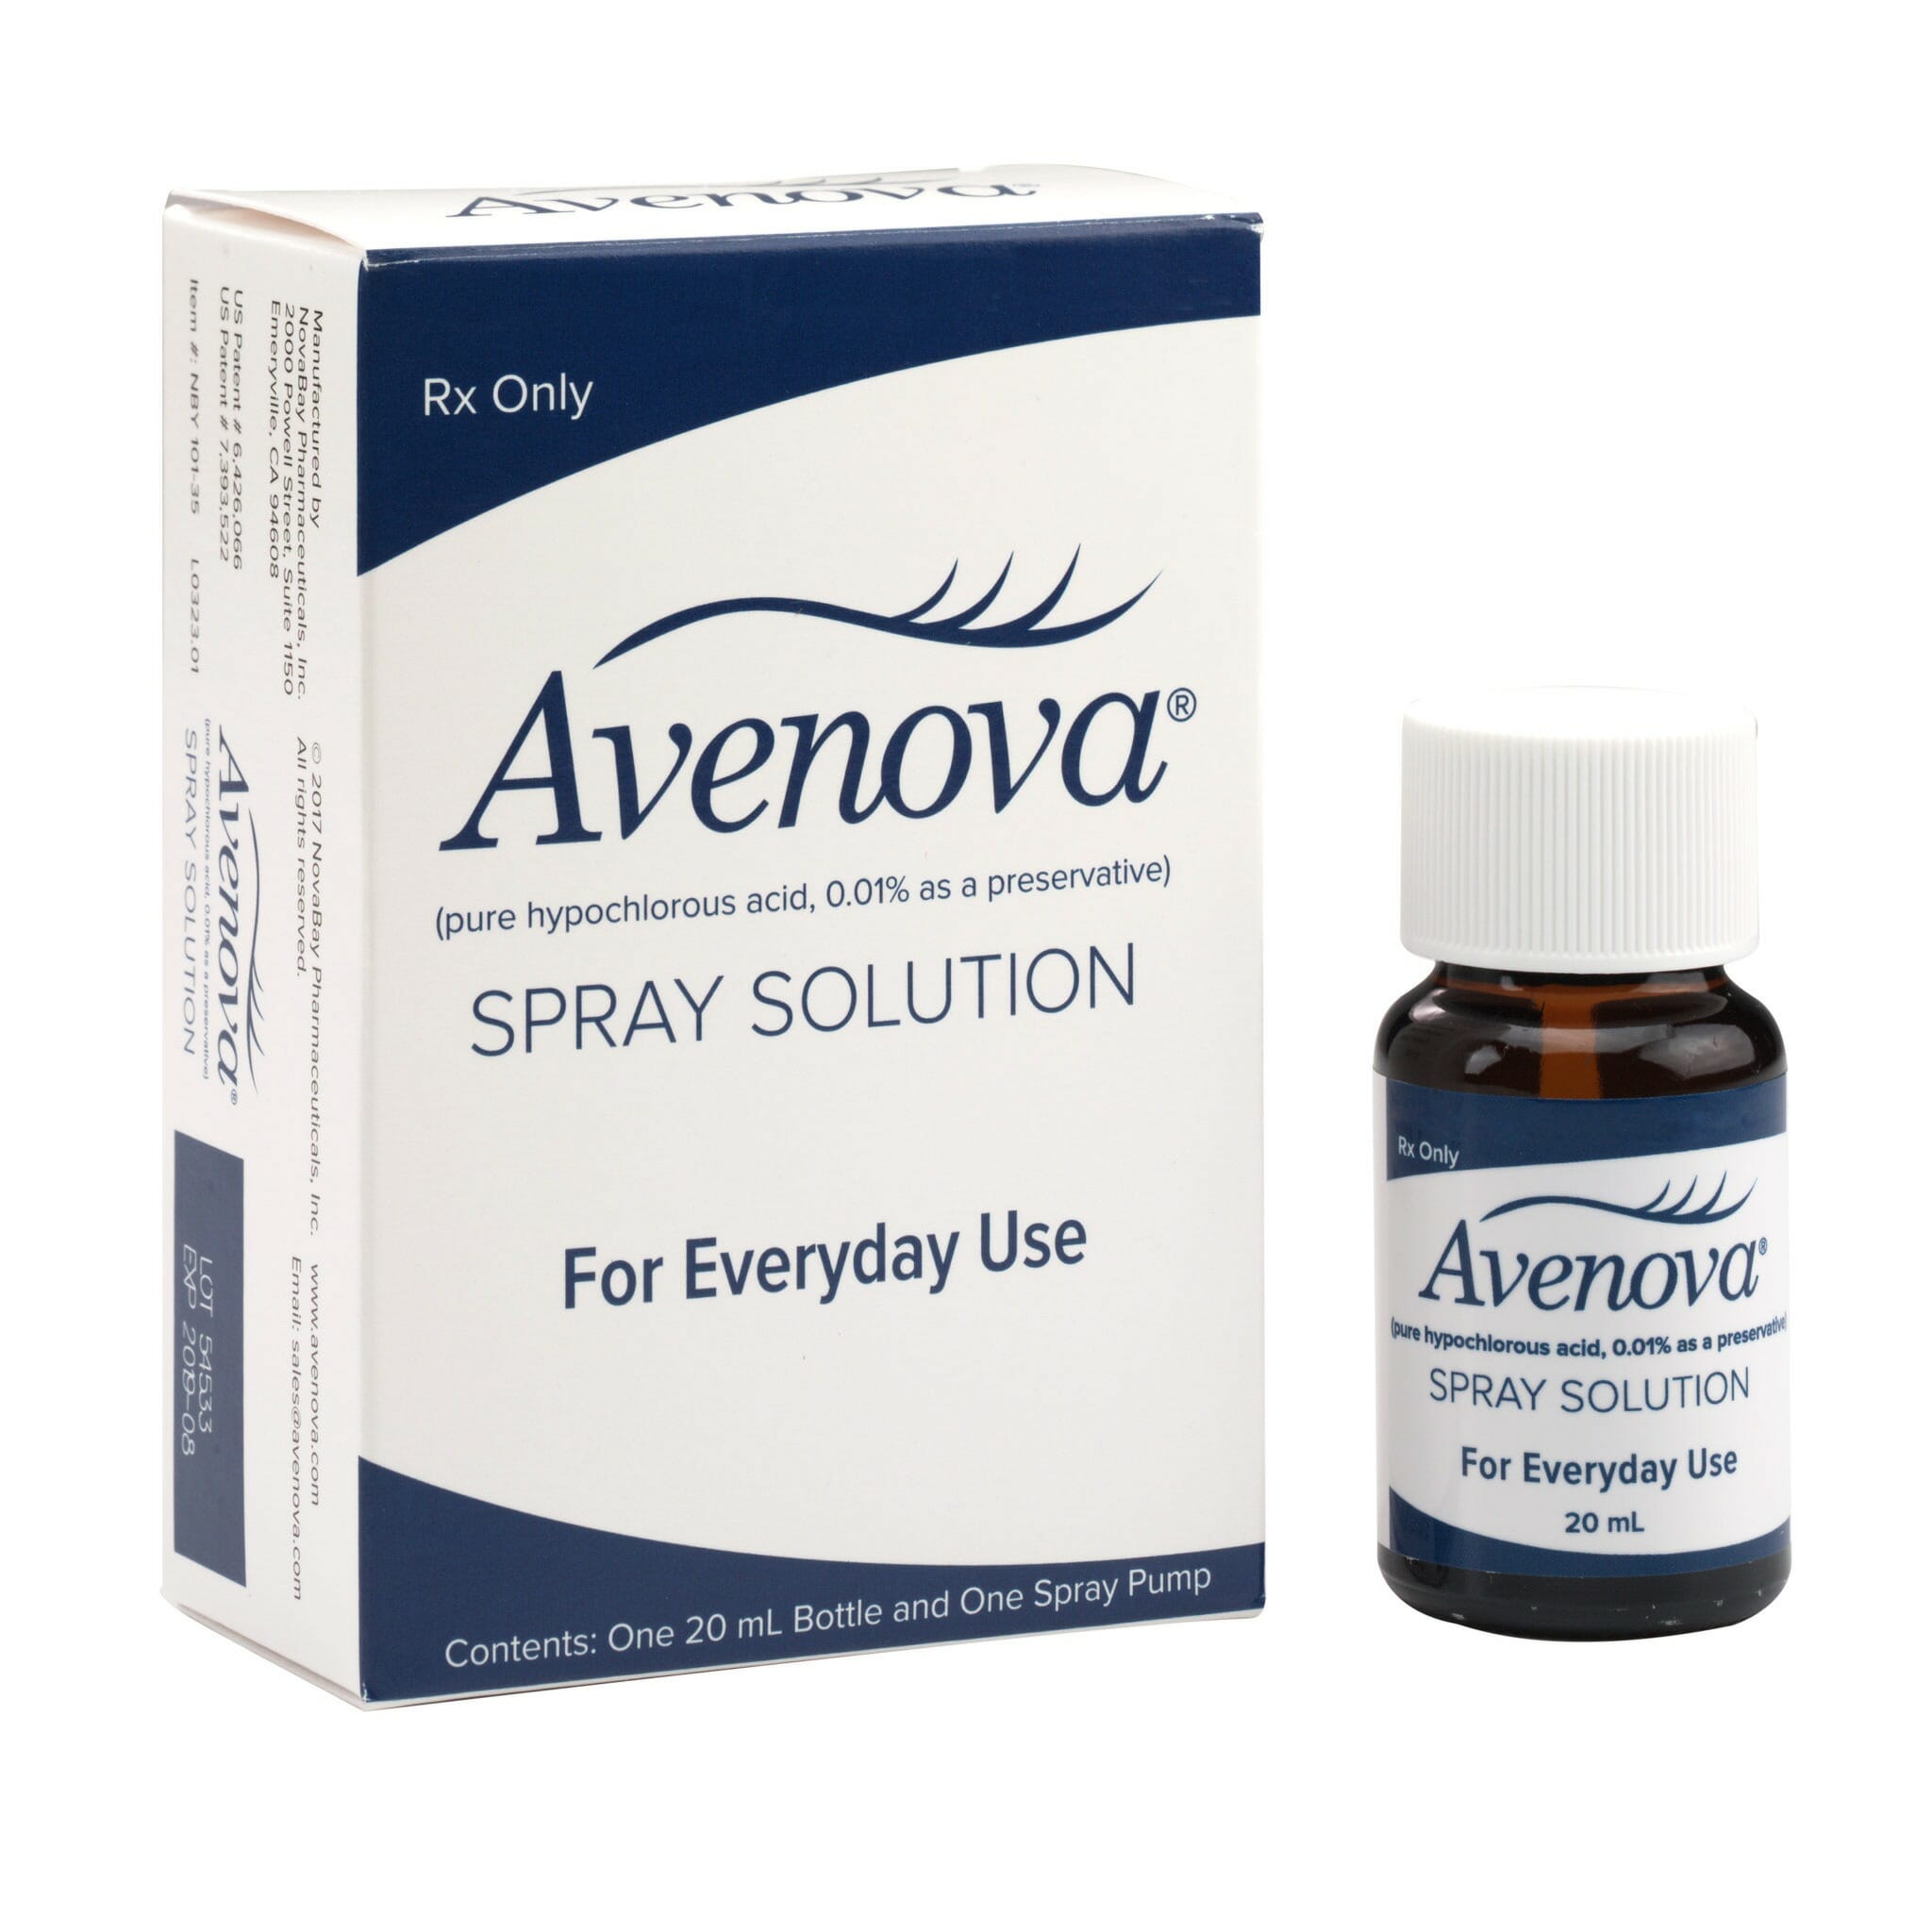 What's the main use of Avenova eyelid and eyelash cleanser?